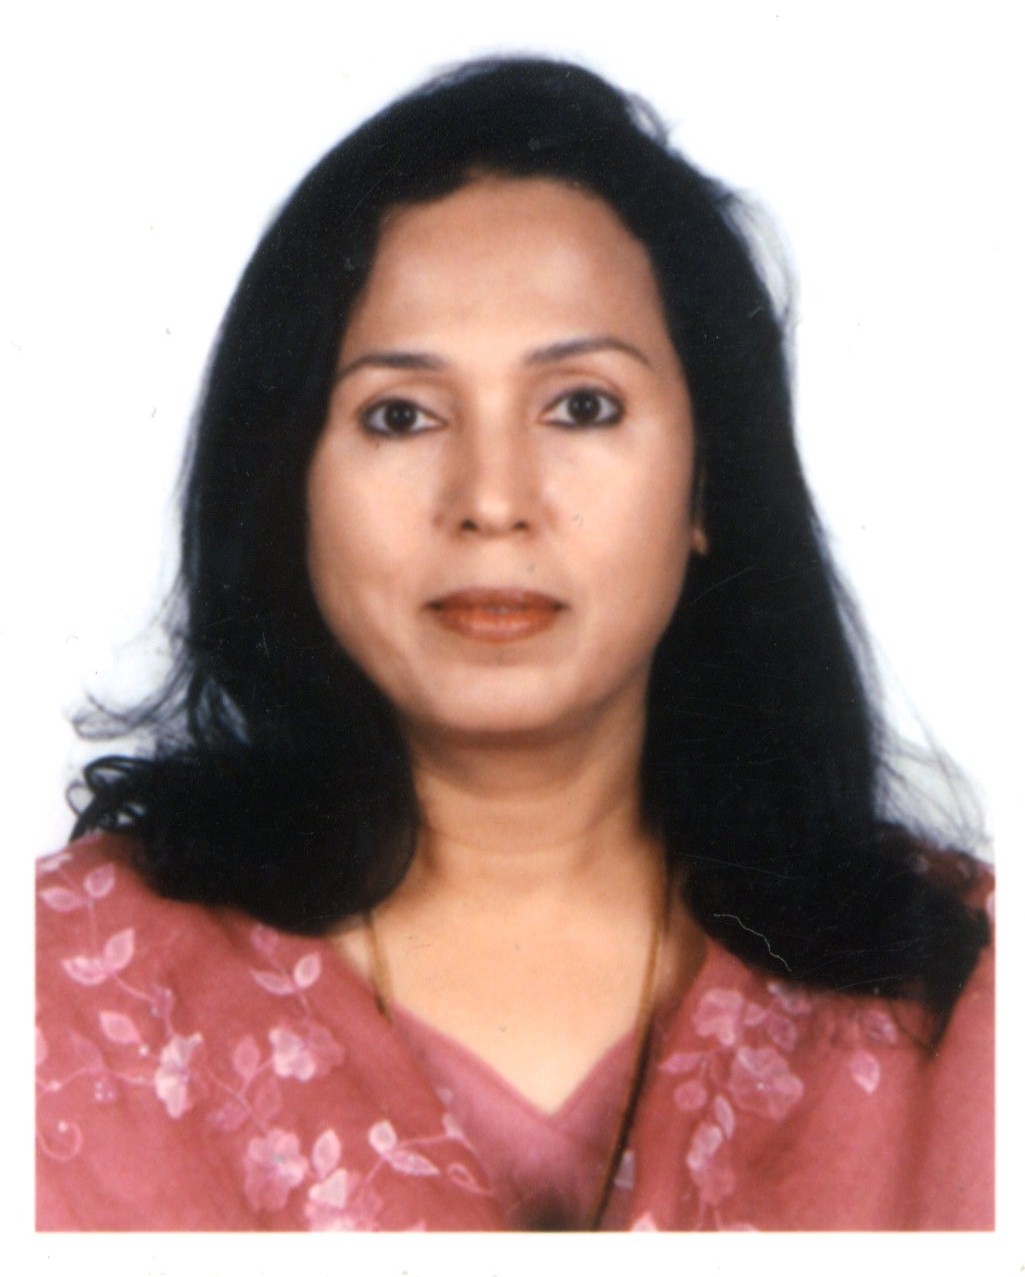 Ms. Salina Ali